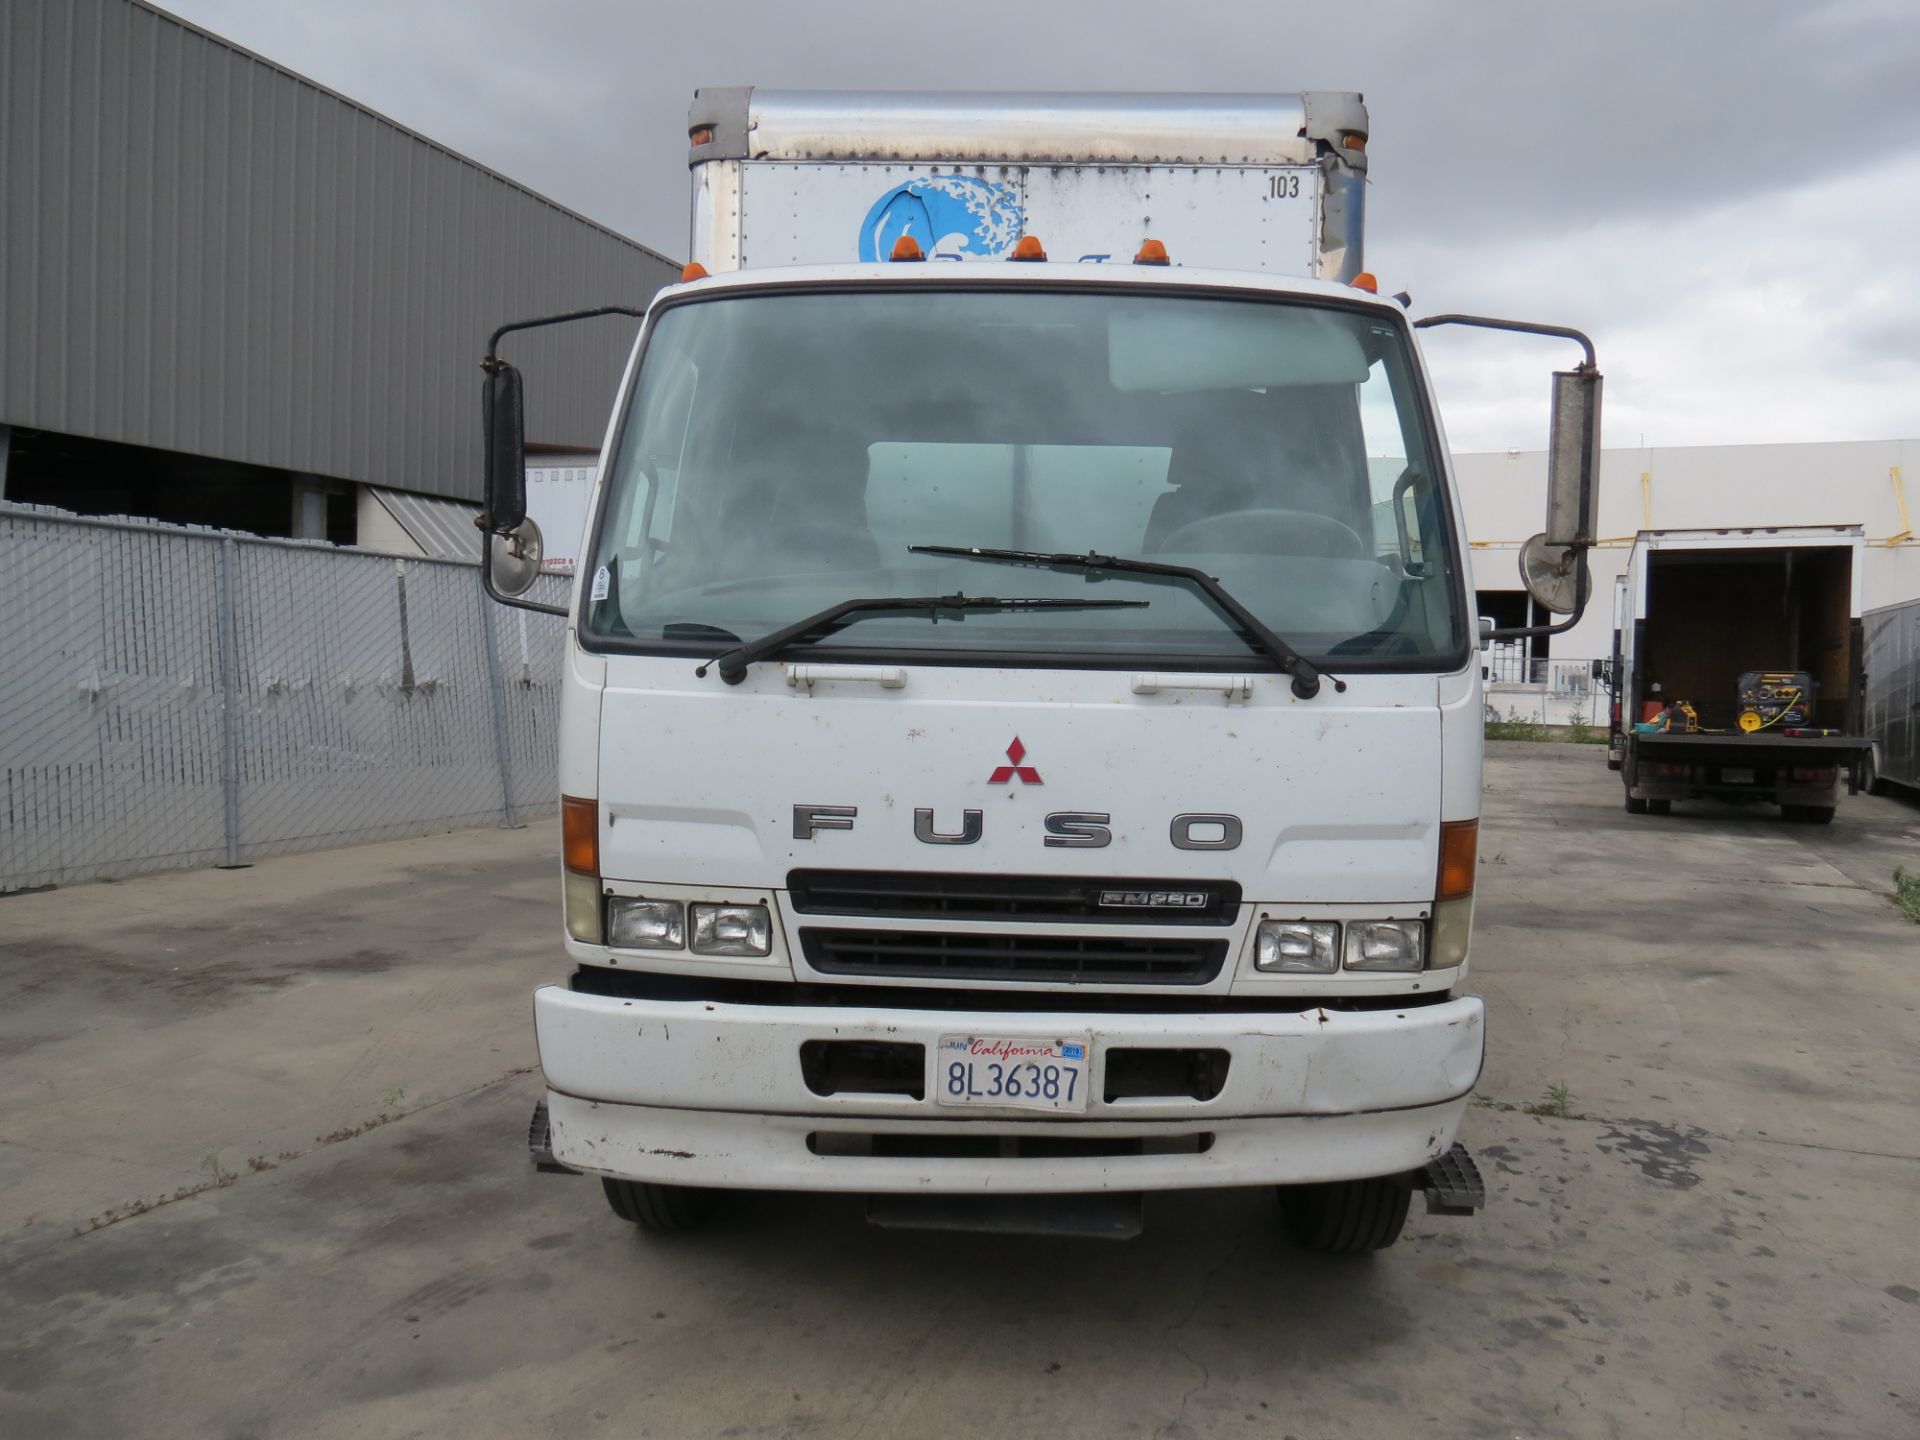 2007 Mitsubishi Fuso 28' FM-260 Box Truck W/Lift Gate, Manual Transmission, #103, VIN: